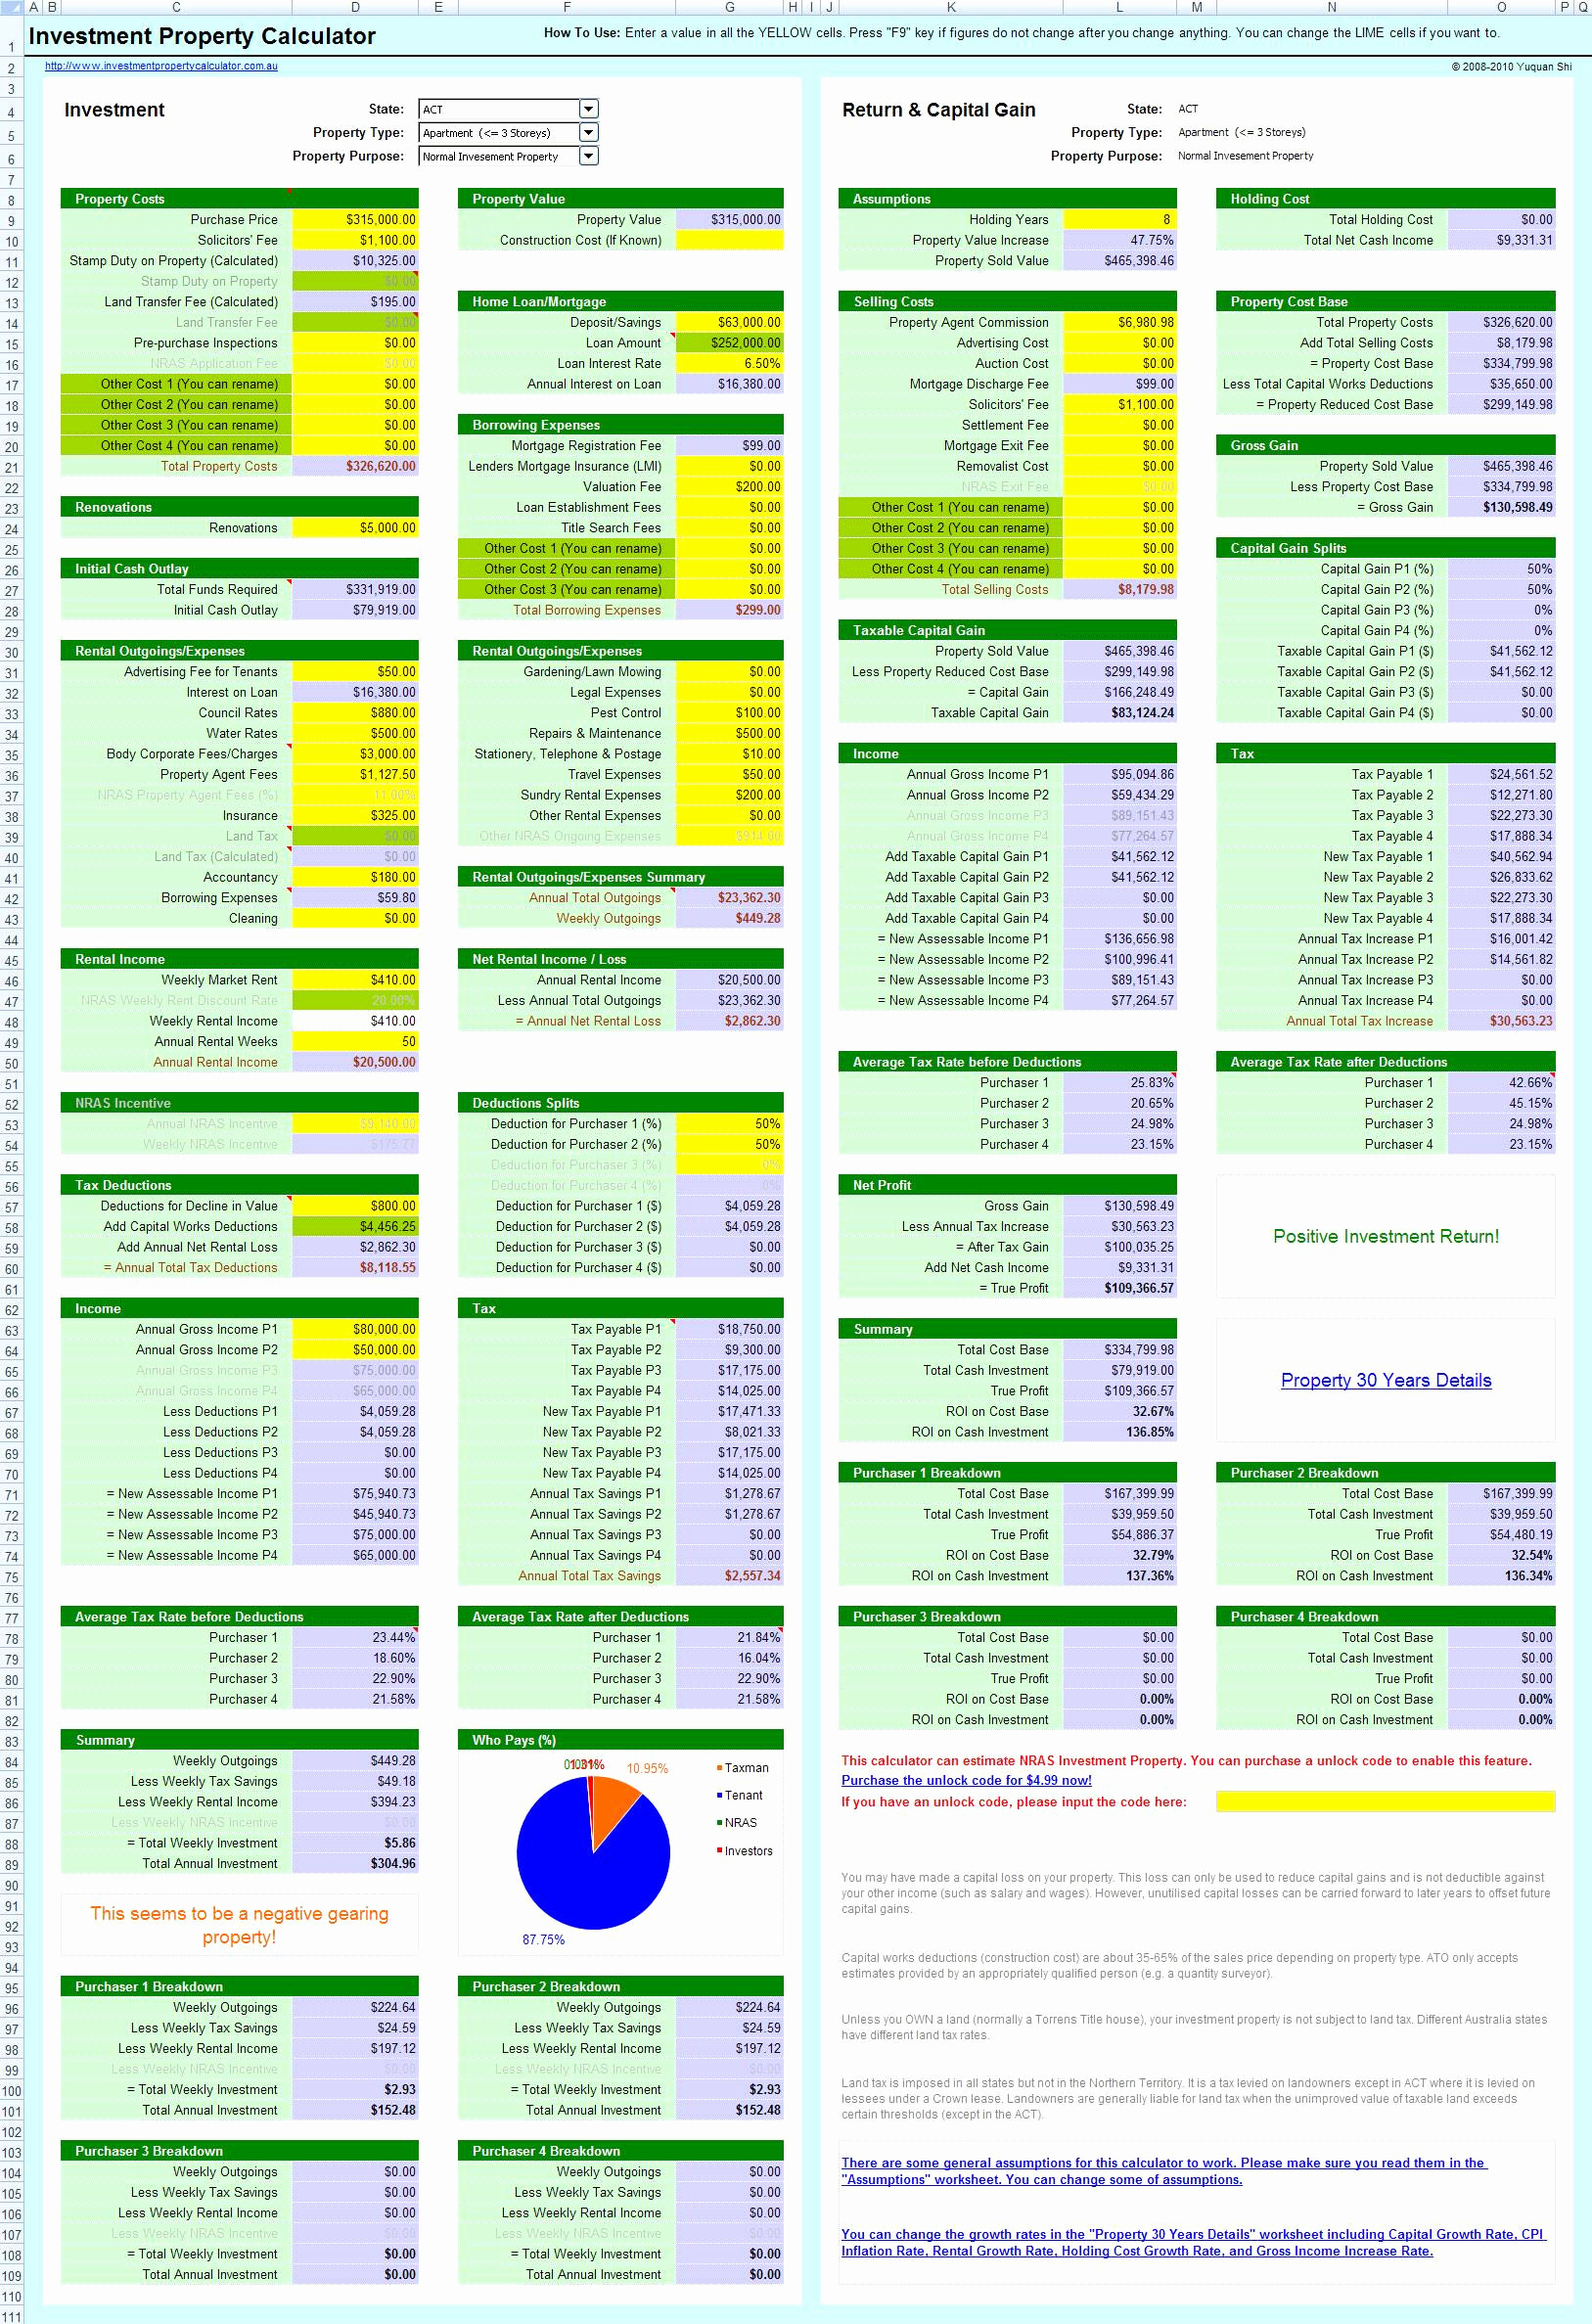 Excel Spreadsheet For Real Estate Investment In Real Estate Investment Analysis Excel Spreadsheet  Spreadsheet